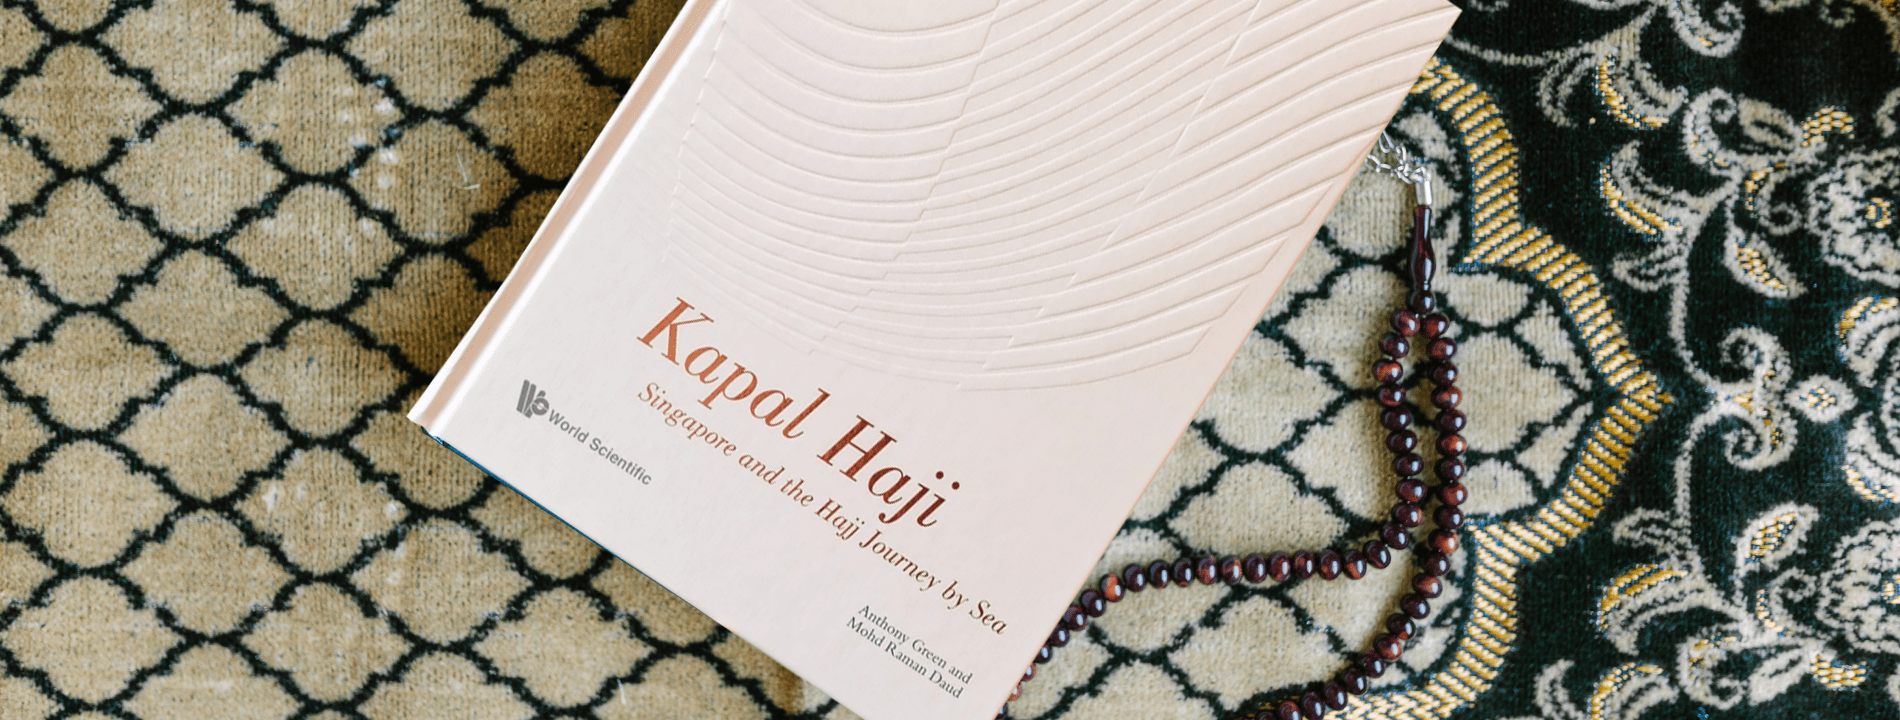 Kapal Haji book cover